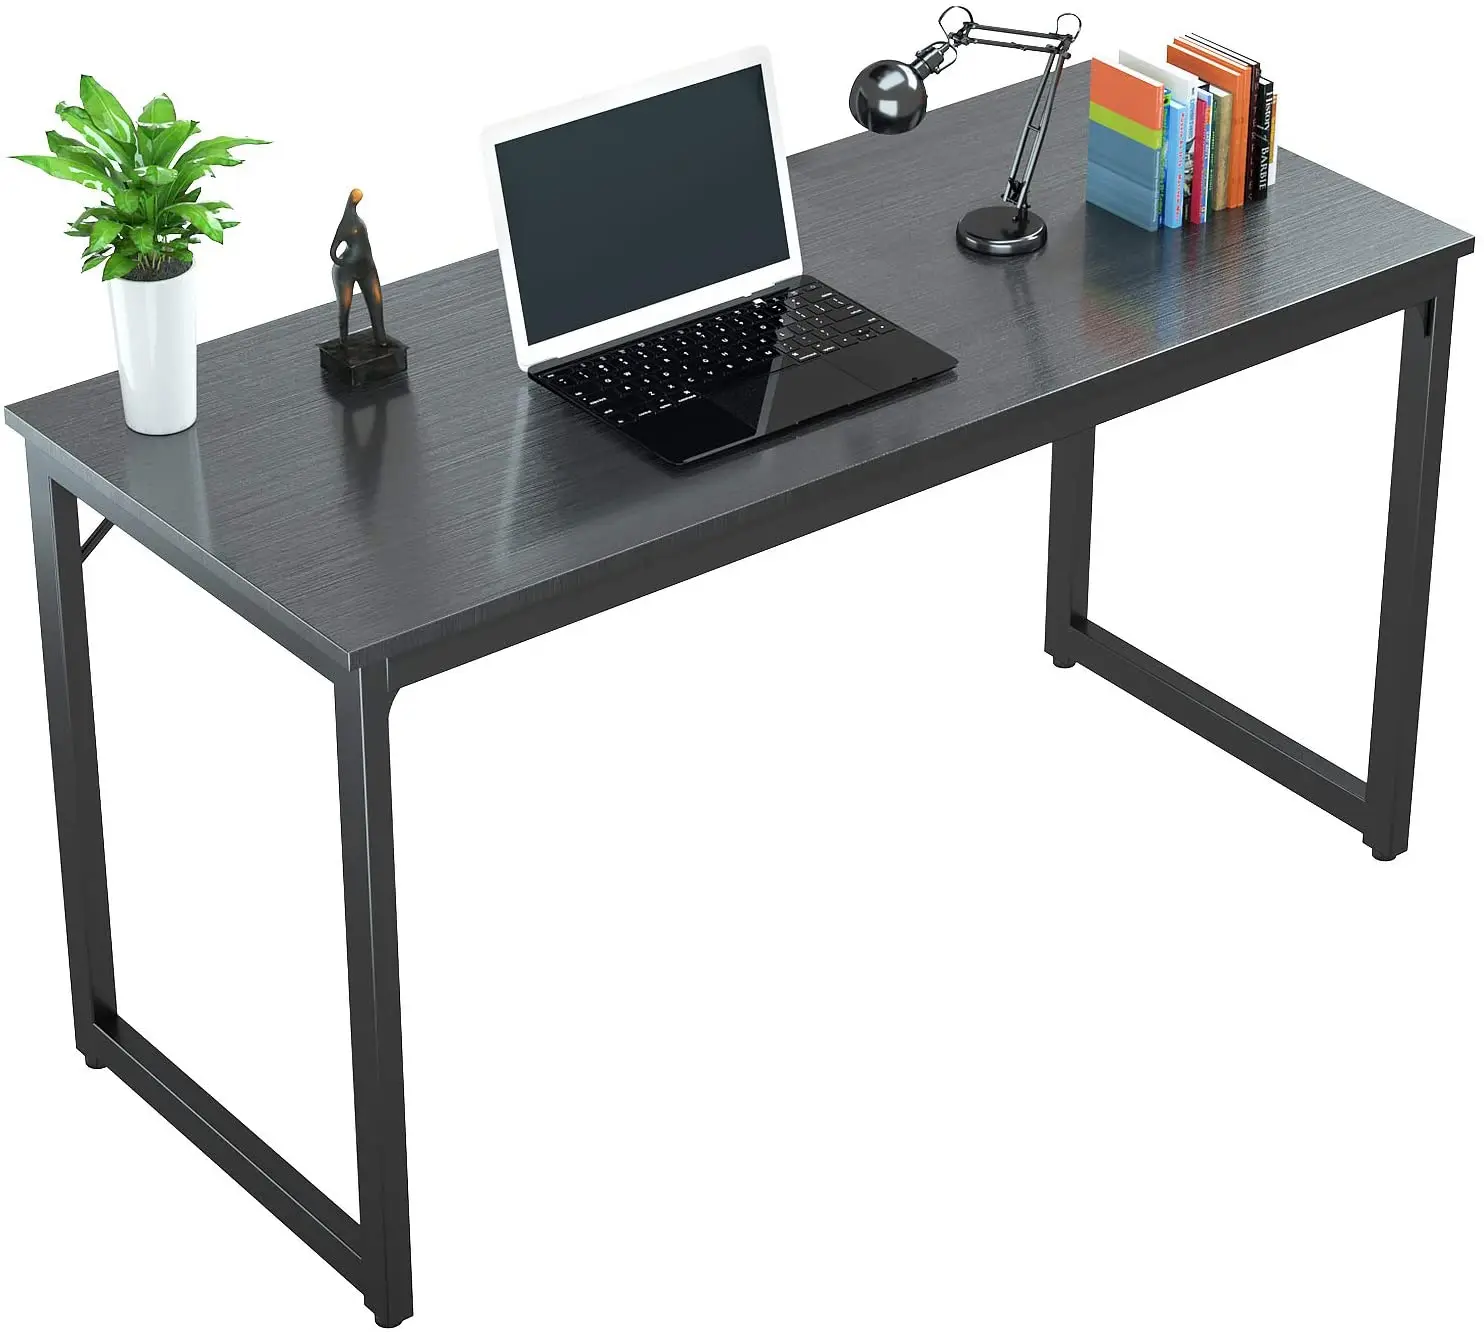 Sengo Home Office Desk Computer Desk Work Table Study Writing Table Workstation Desk Gaming Desk for Home Office Furniture 47“, Brown 